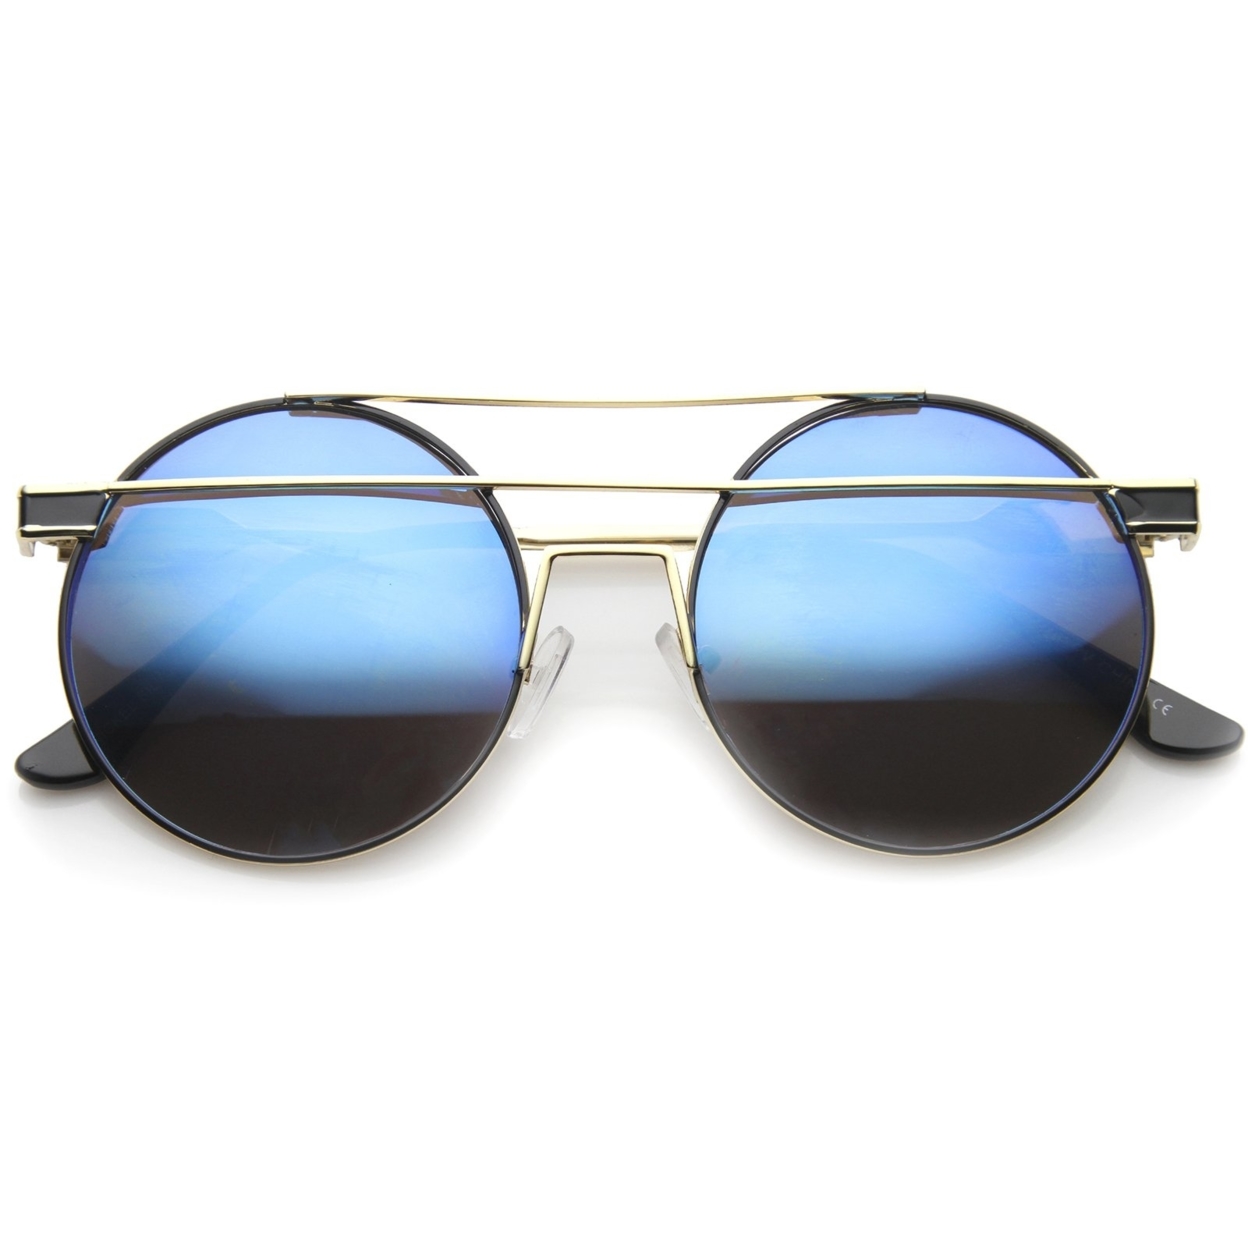 Modern Metal Frame Double Bridge Colored Mirror Lens Round Sunglasses 59mm - Silver-Black / Green Blue Mirror